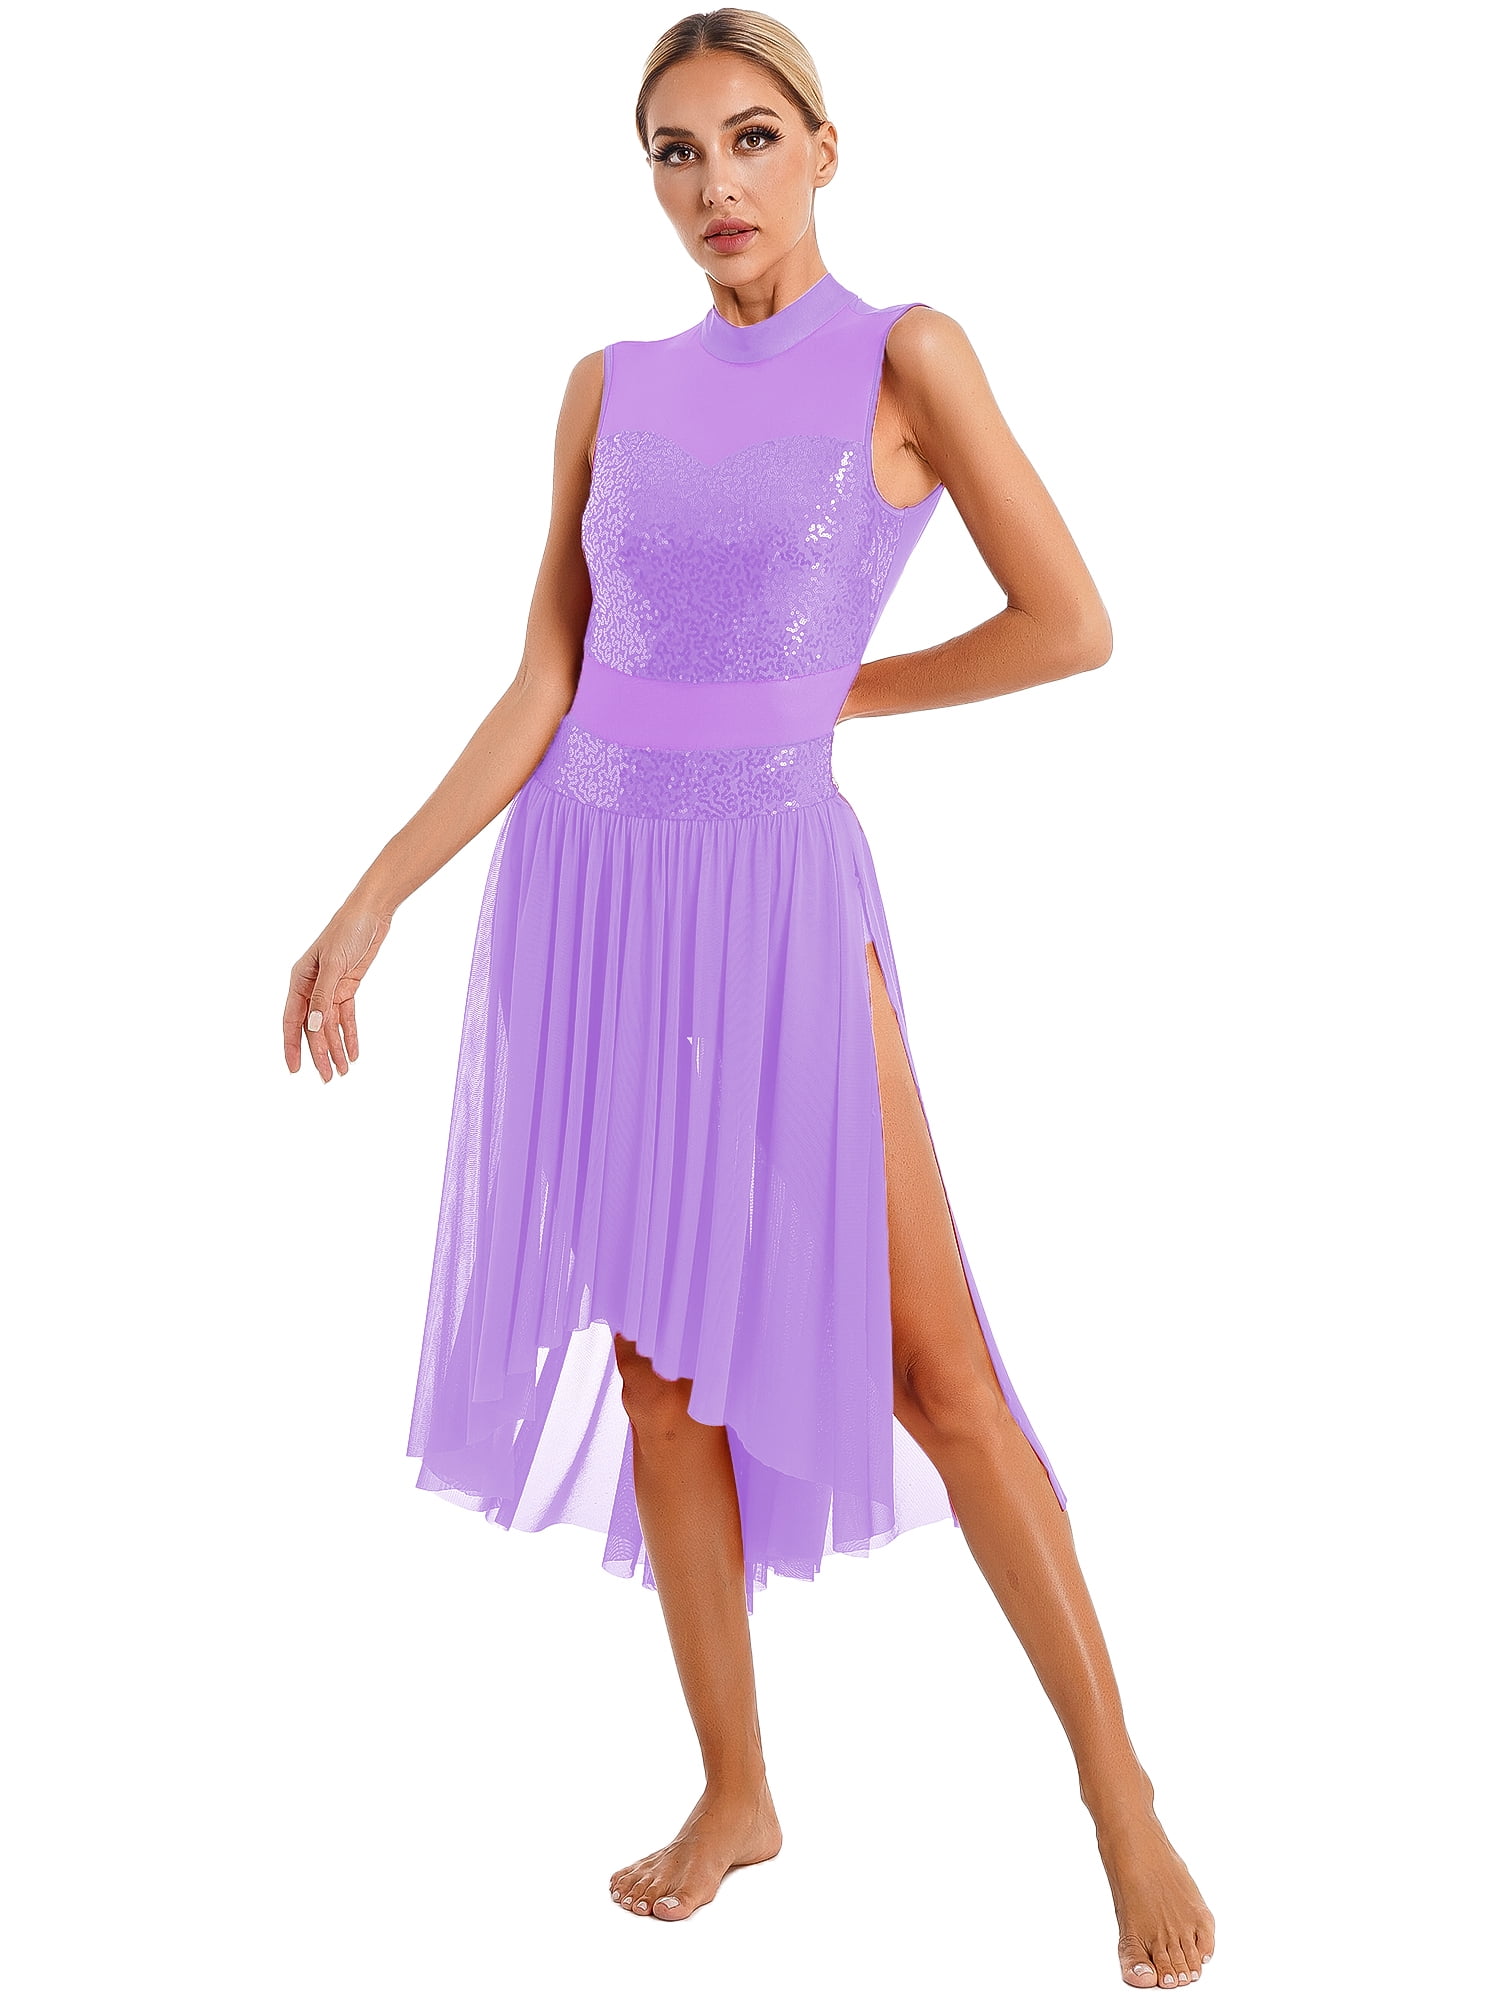 Classic Crystal Edged Metallic Glitter Purple Sequin Diva's Dance Dress